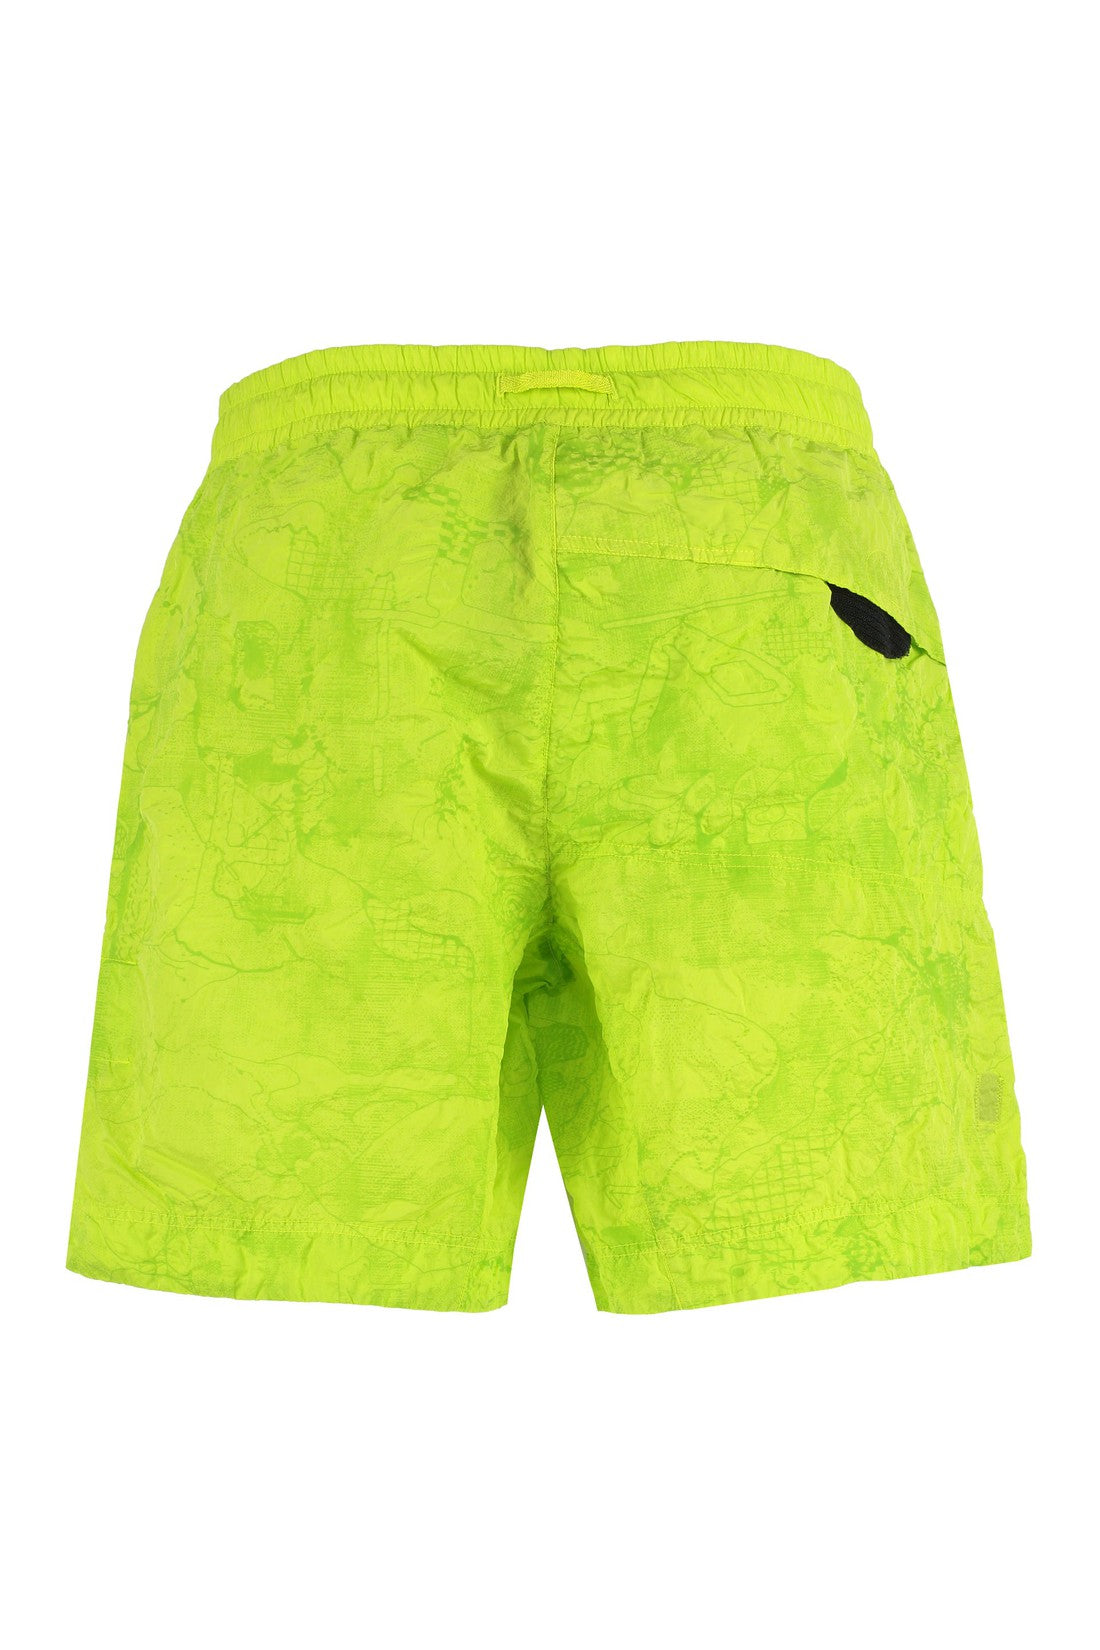 Stone Island Shadow Project-OUTLET-SALE-Nylon swim shorts-ARCHIVIST